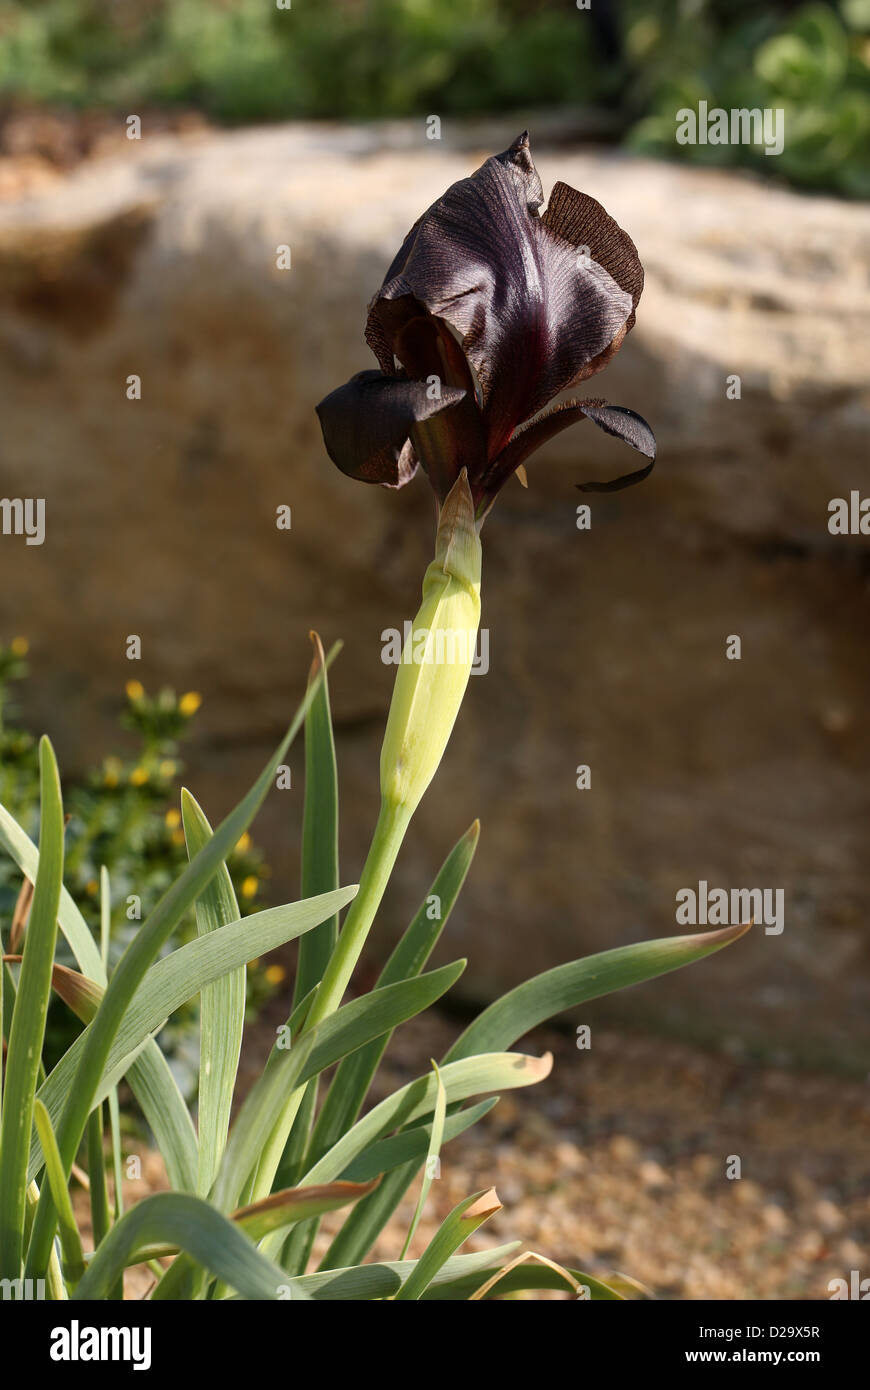 Black Iris, Iris nigricans, Iridaceae. Jordan. The national flower of Jordan. Stock Photo